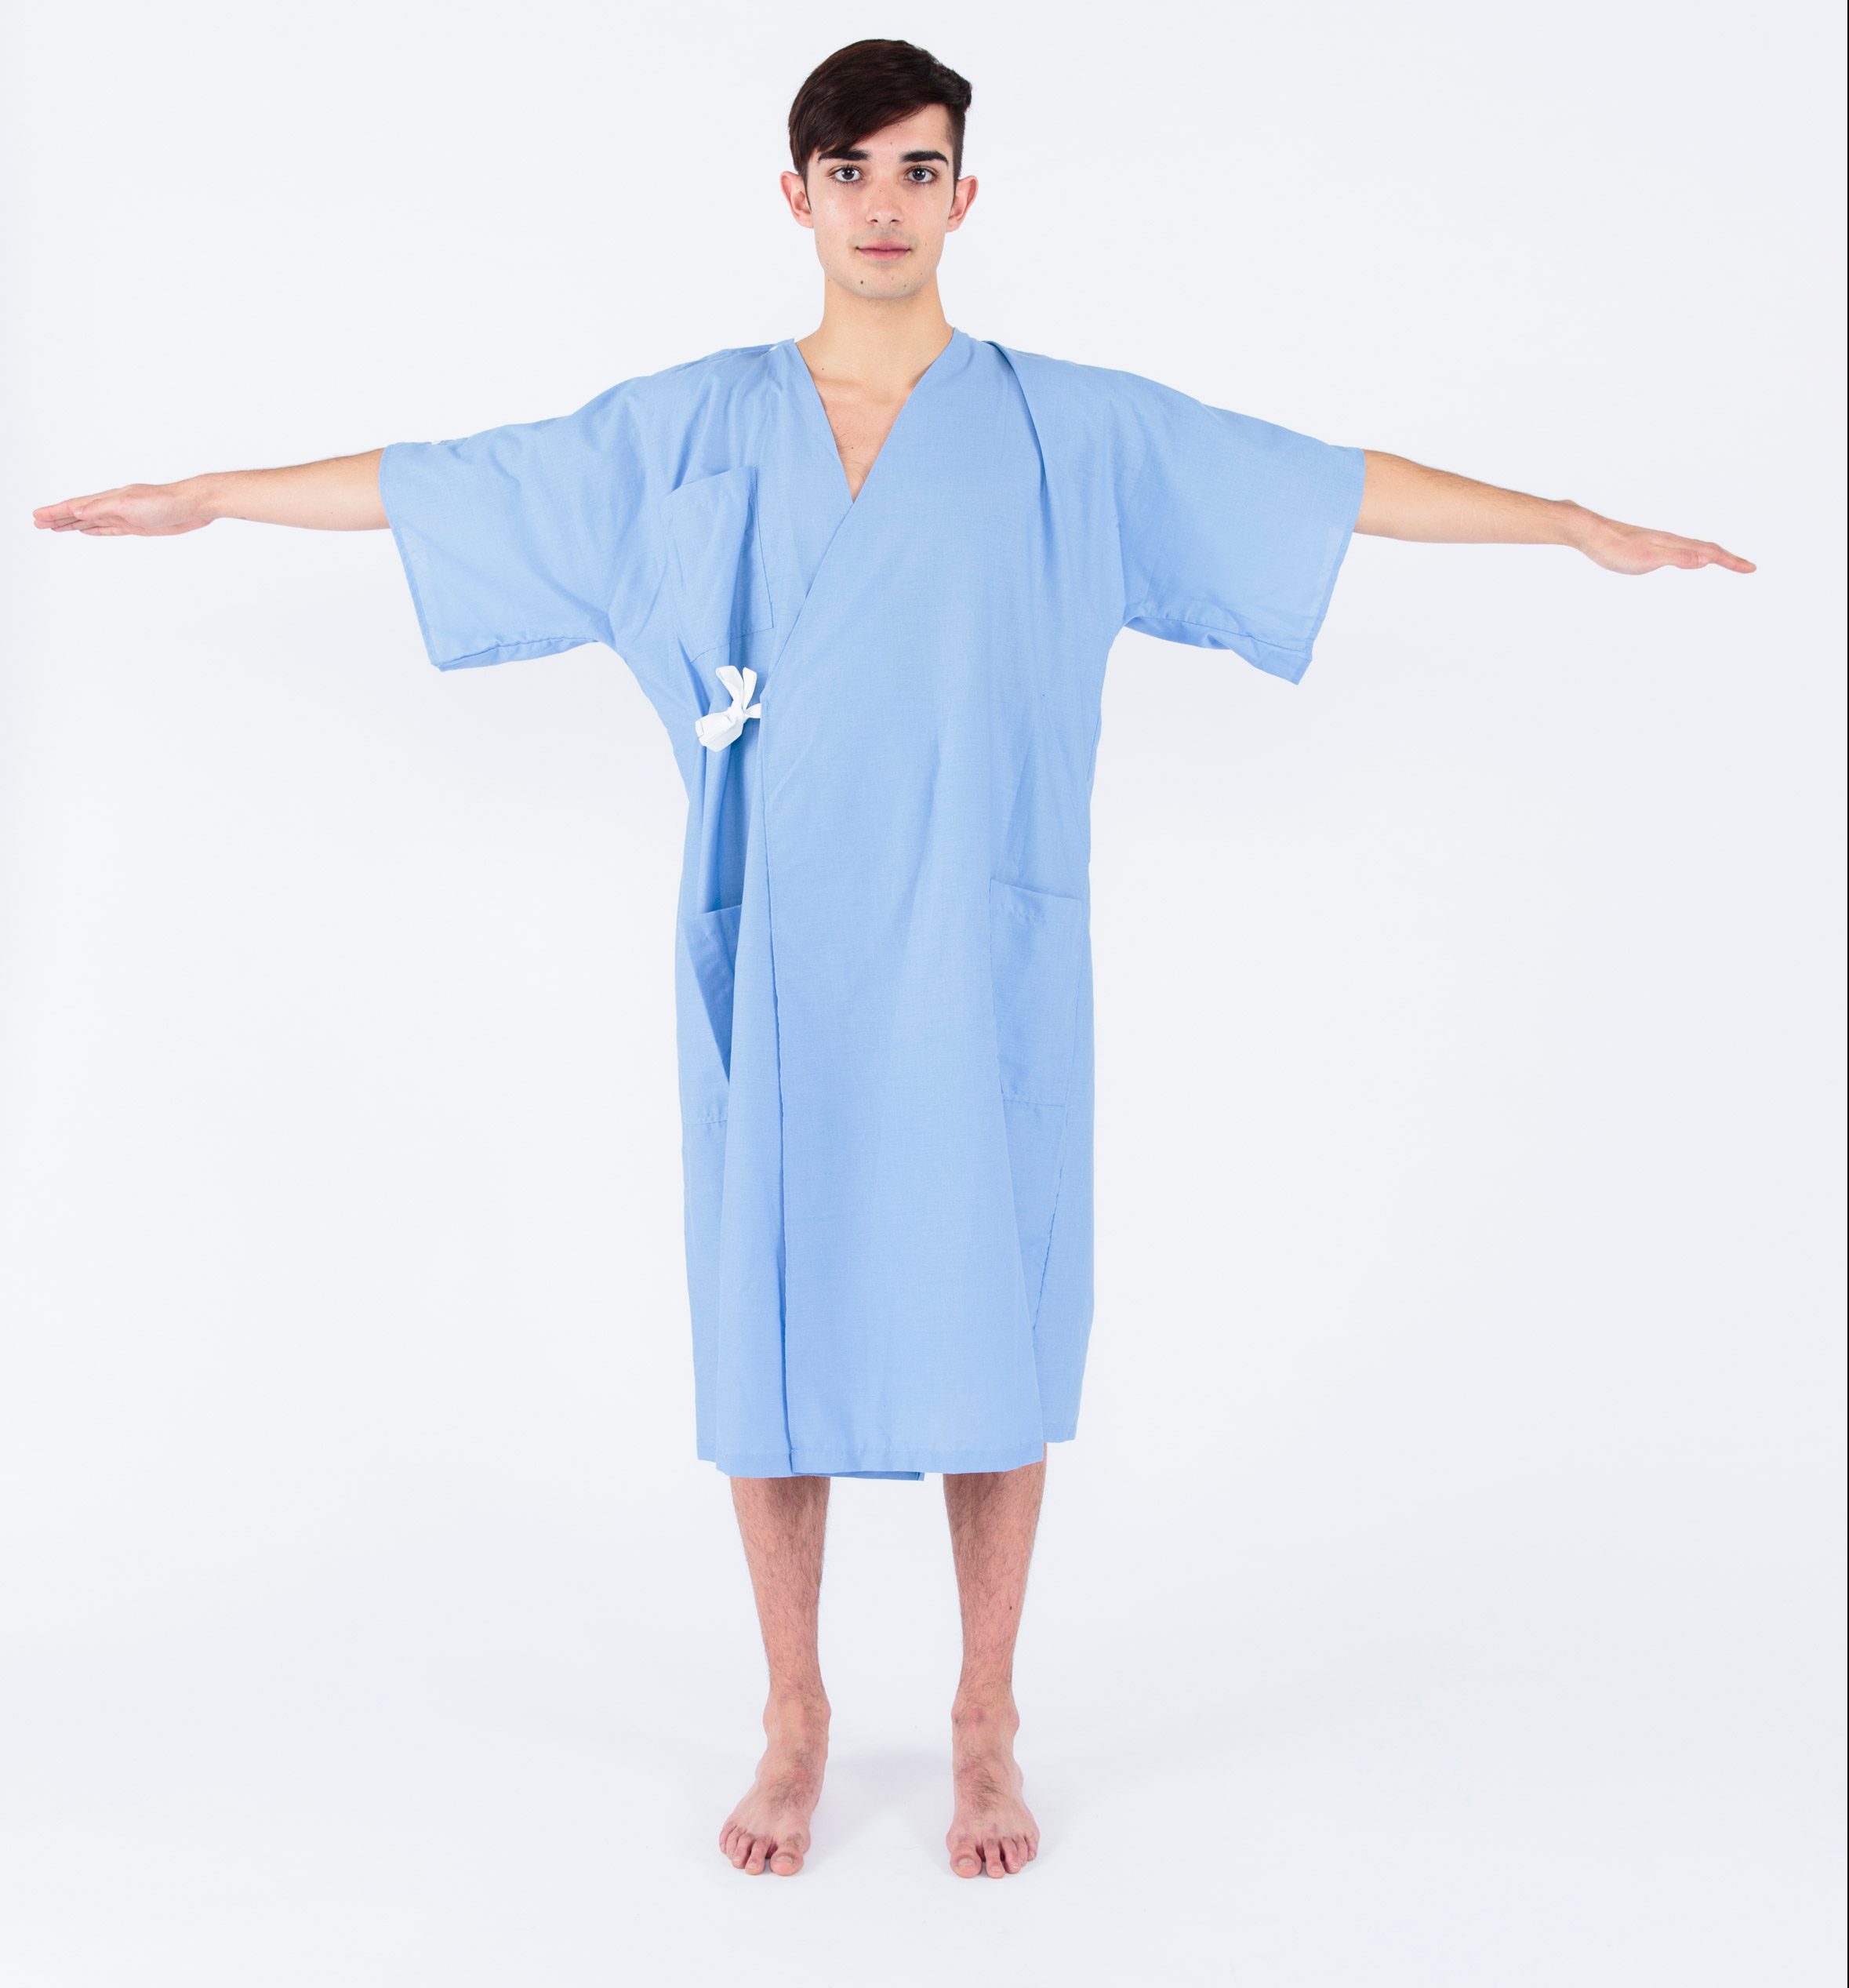 Surgeon Gown with Overlap - SGOL | Uniform Craft